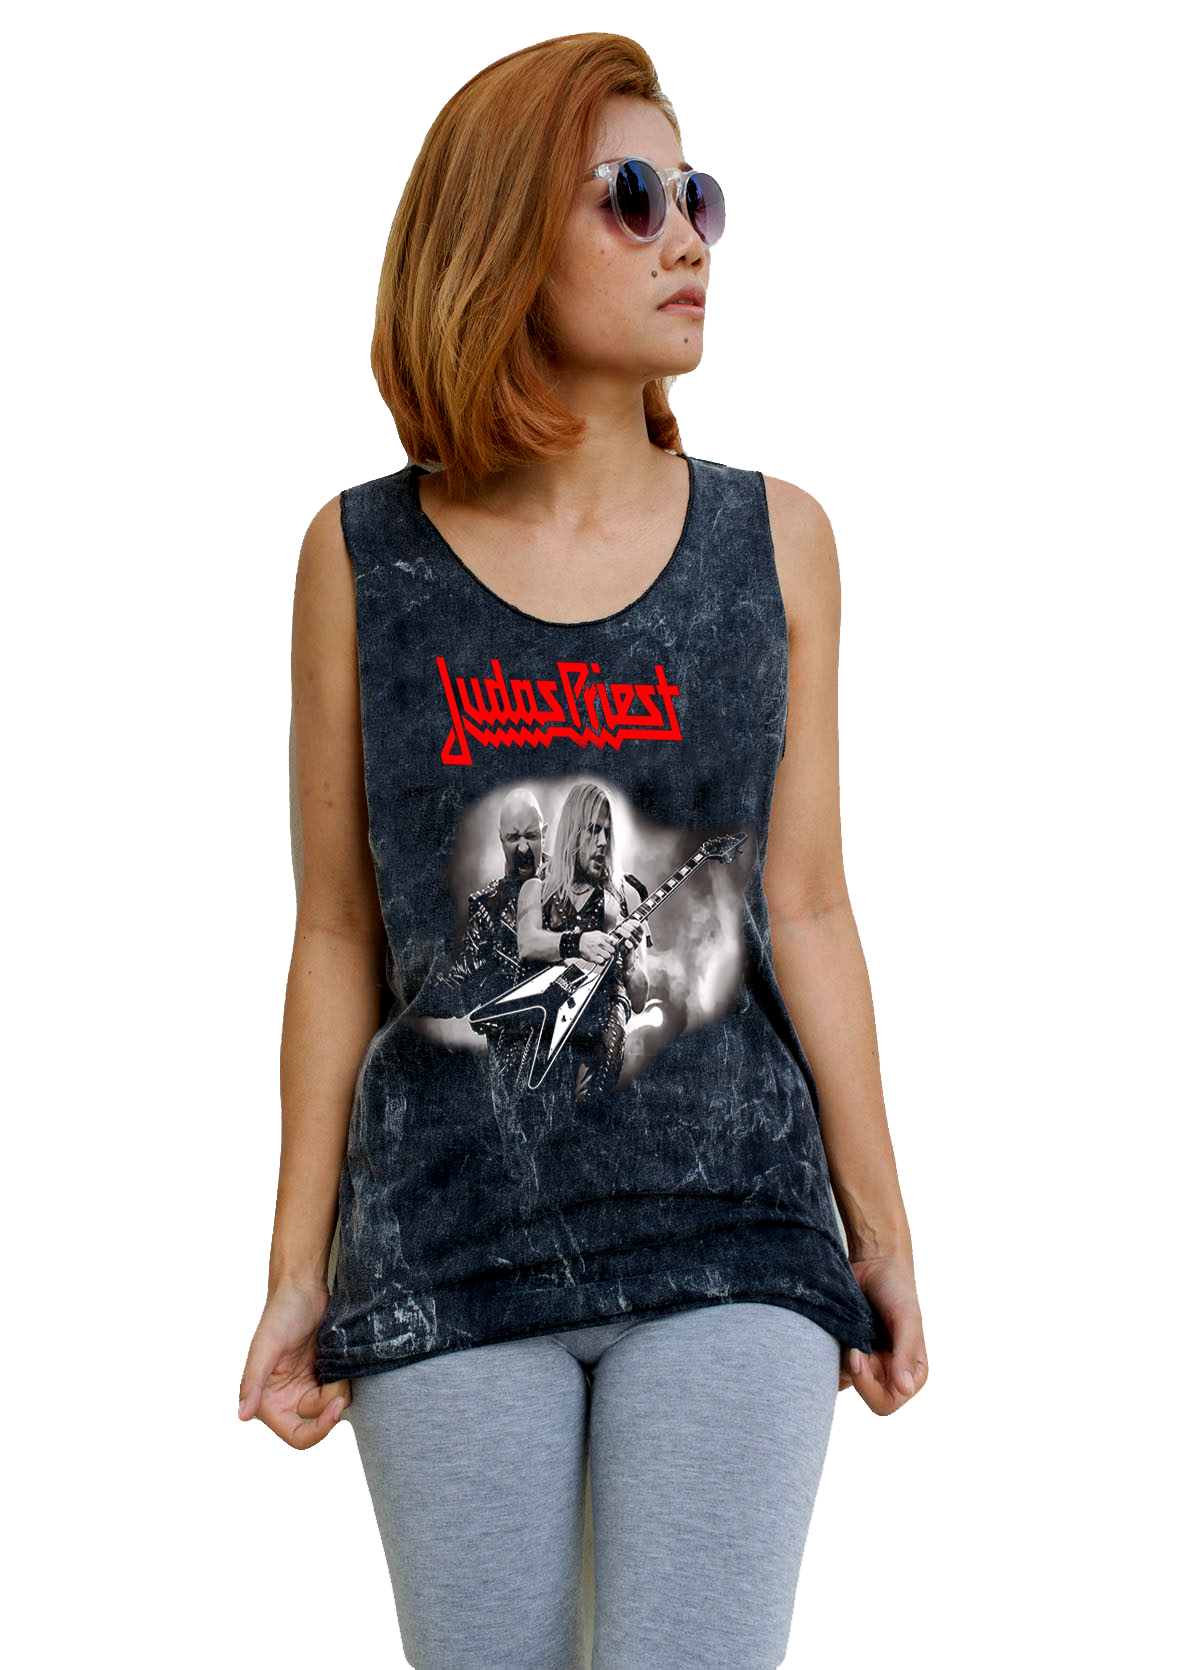 Unisex Judas Priest Tank-Top Singlet vest Sleeveless T-shirt